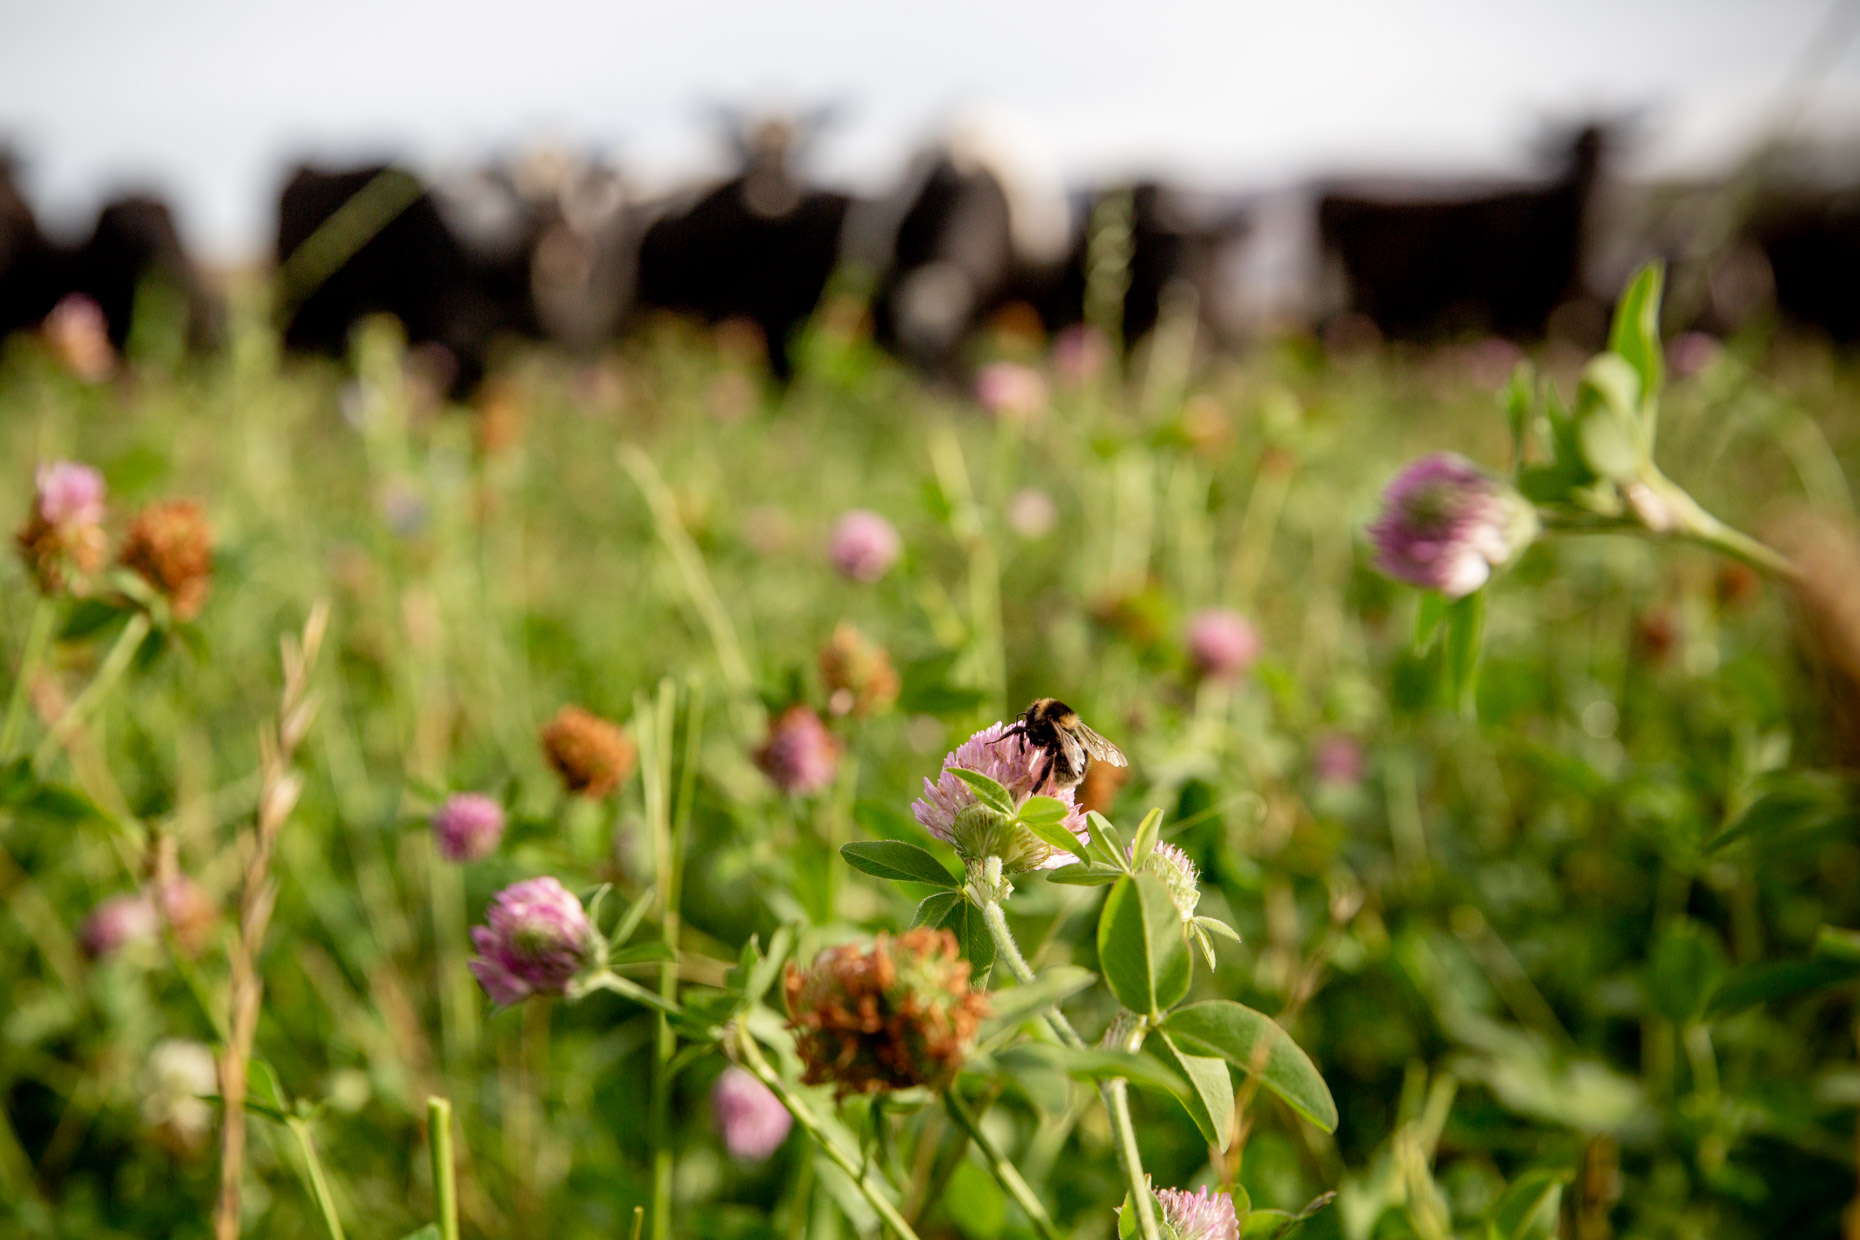 Bumble bee on multi species pasture